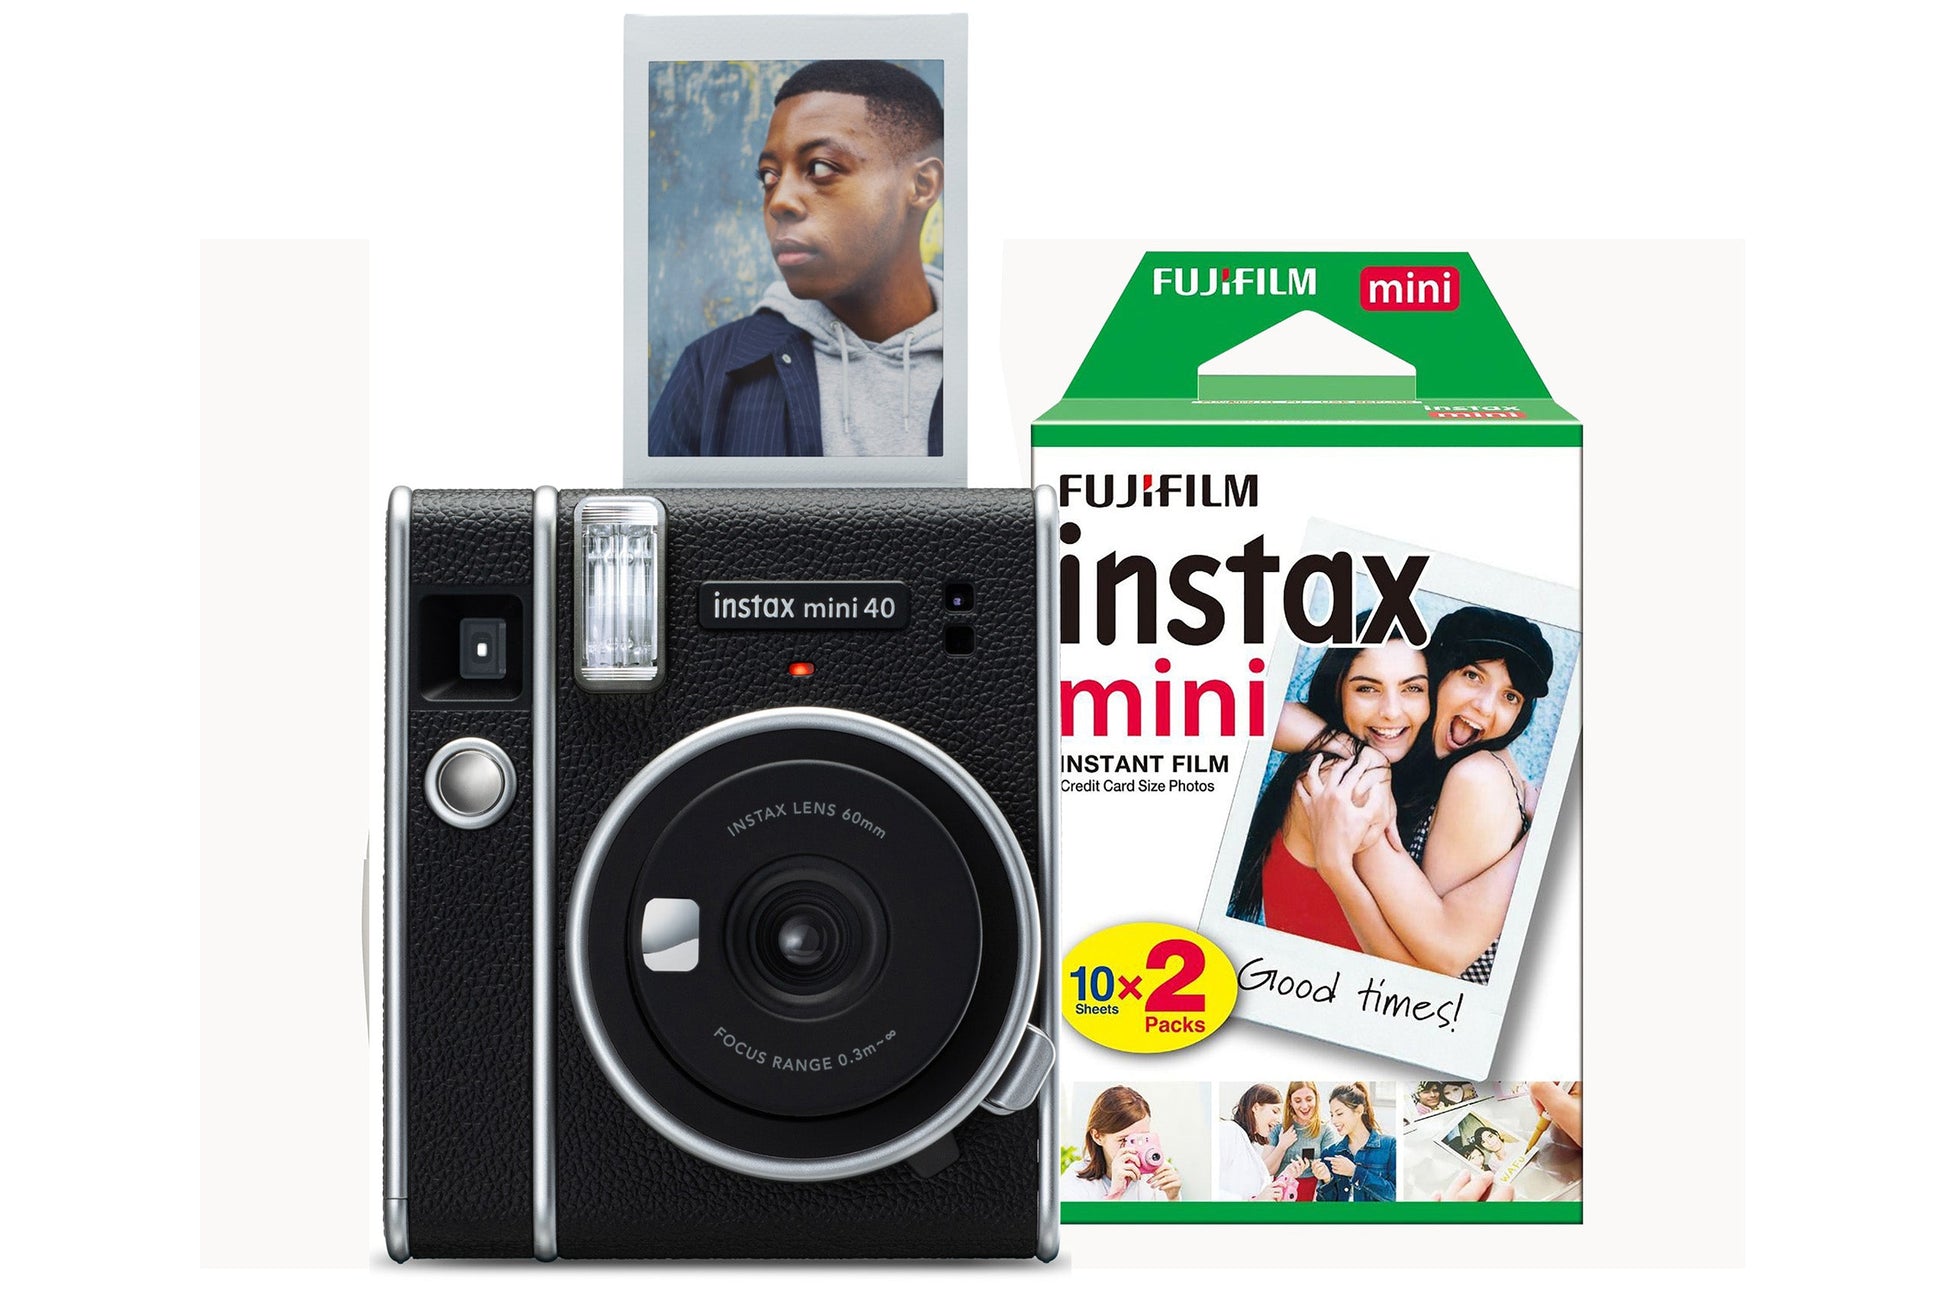 Fujifilm Instax Mini 40 Instant Camera with Built-In Flash & Hand